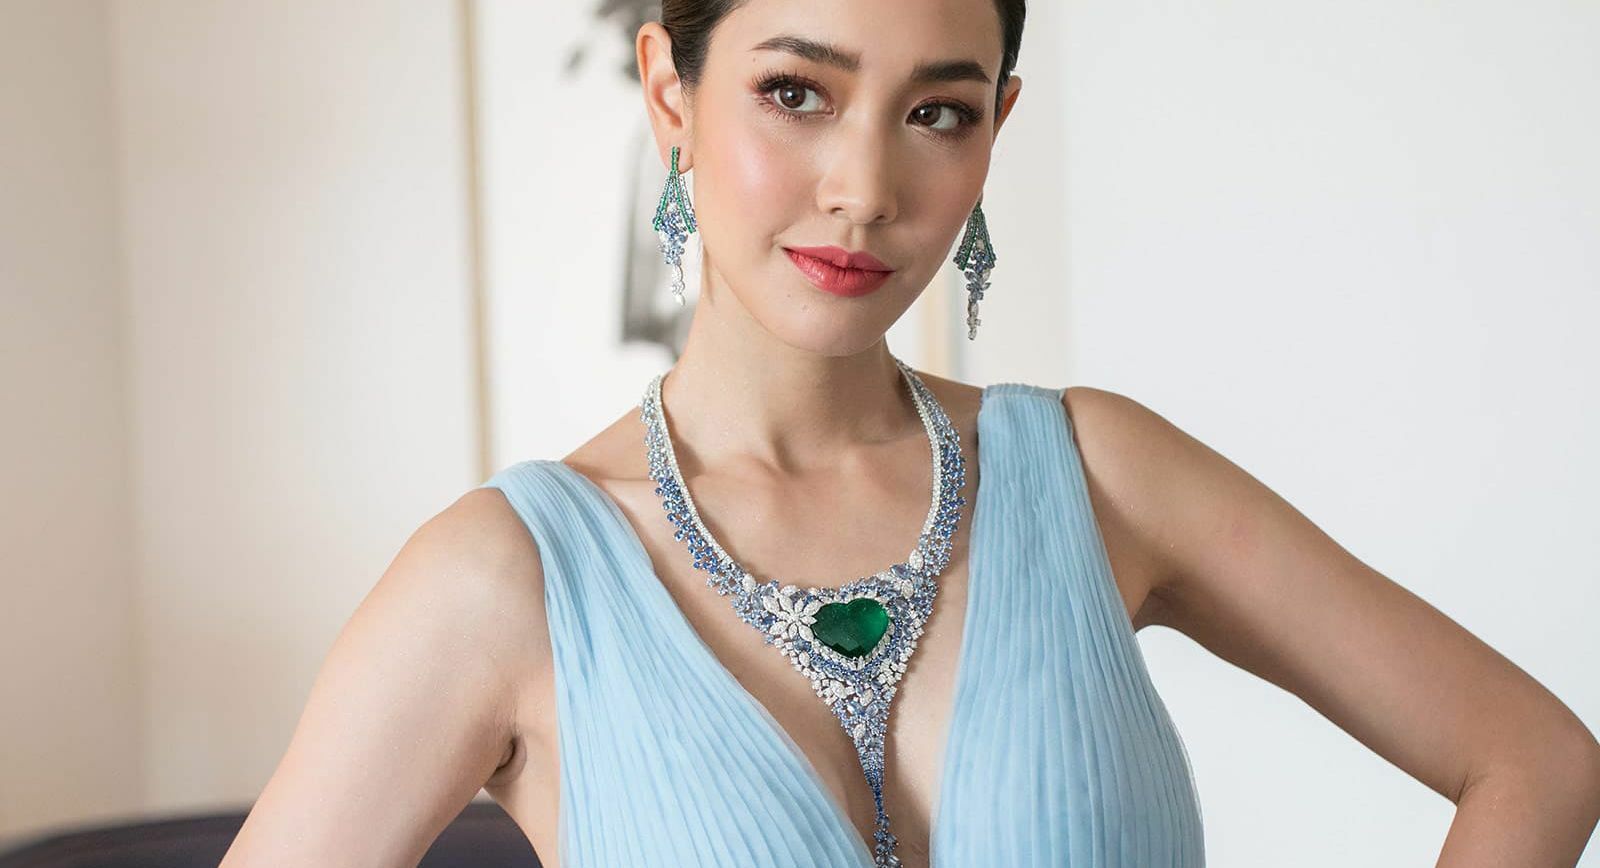 Avakian necklace with a 40-carat heart-shaped Colombian emerald, worn by Thai actress Peechaya Wattanamontree